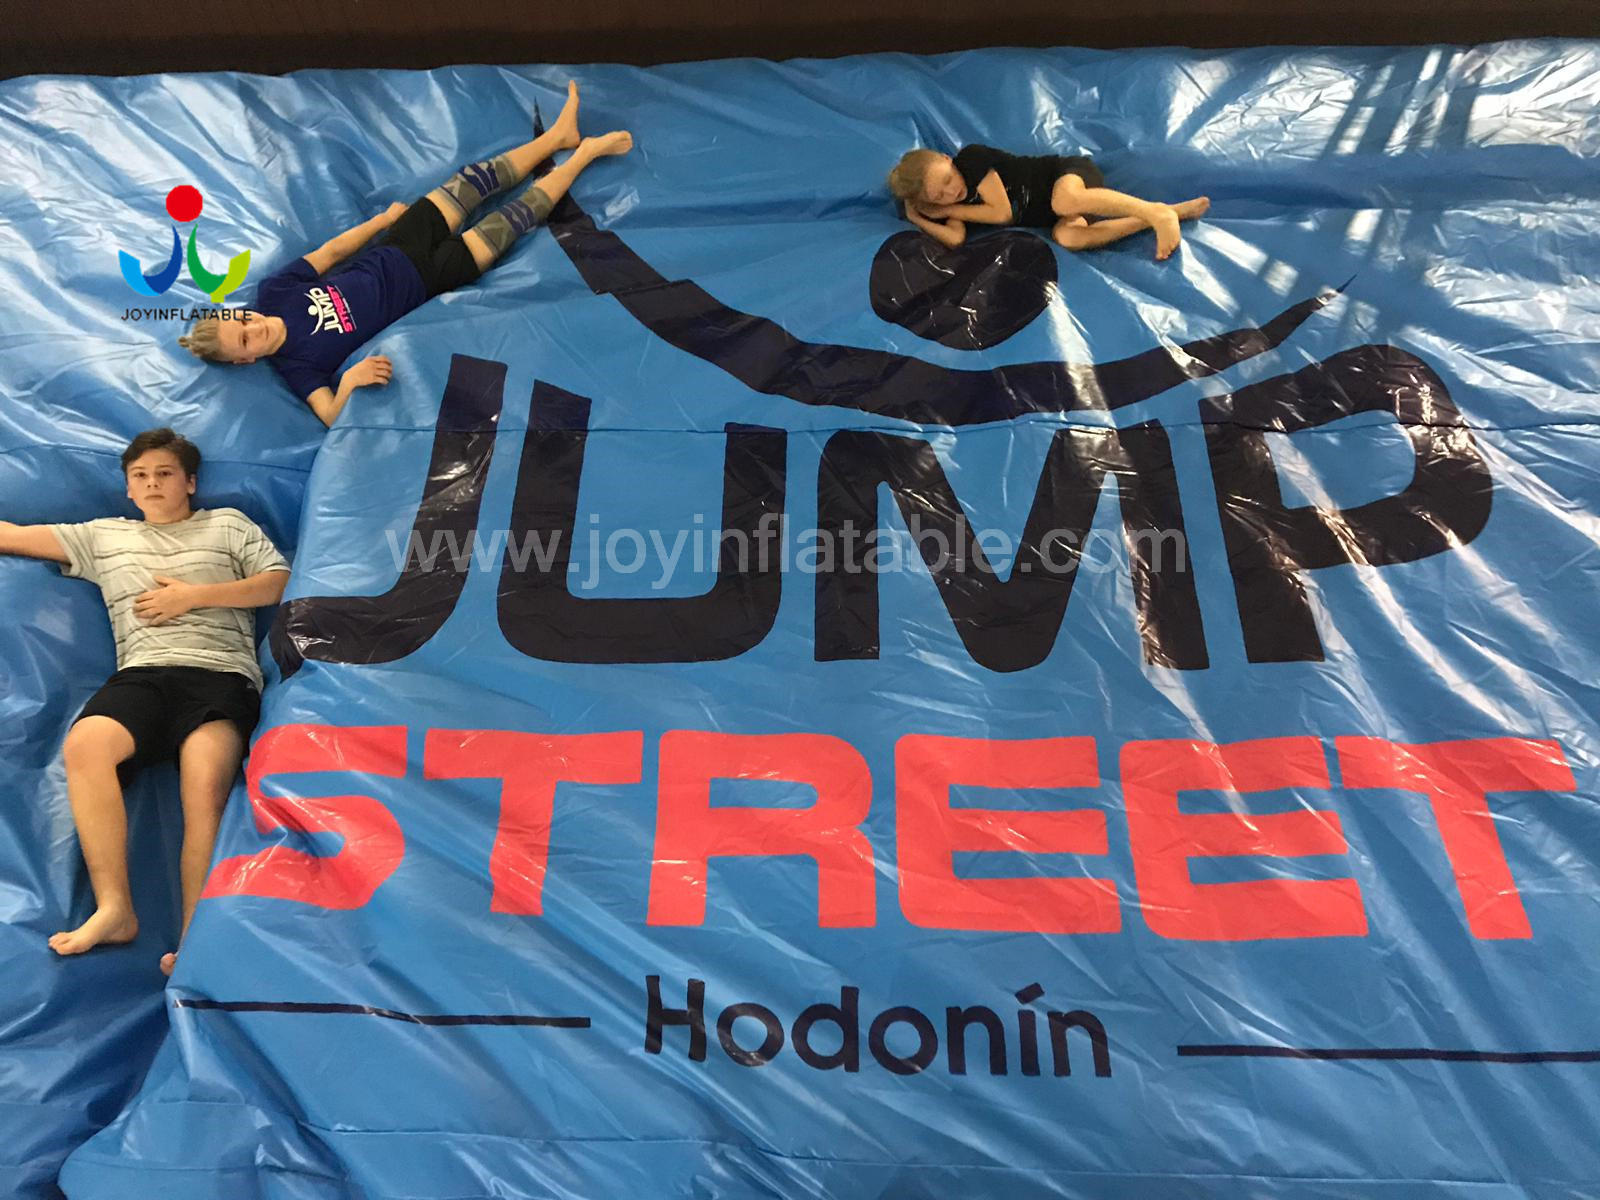 JOY inflatable Bulk buy inflatable stunt bag manufacturers for outdoor activities